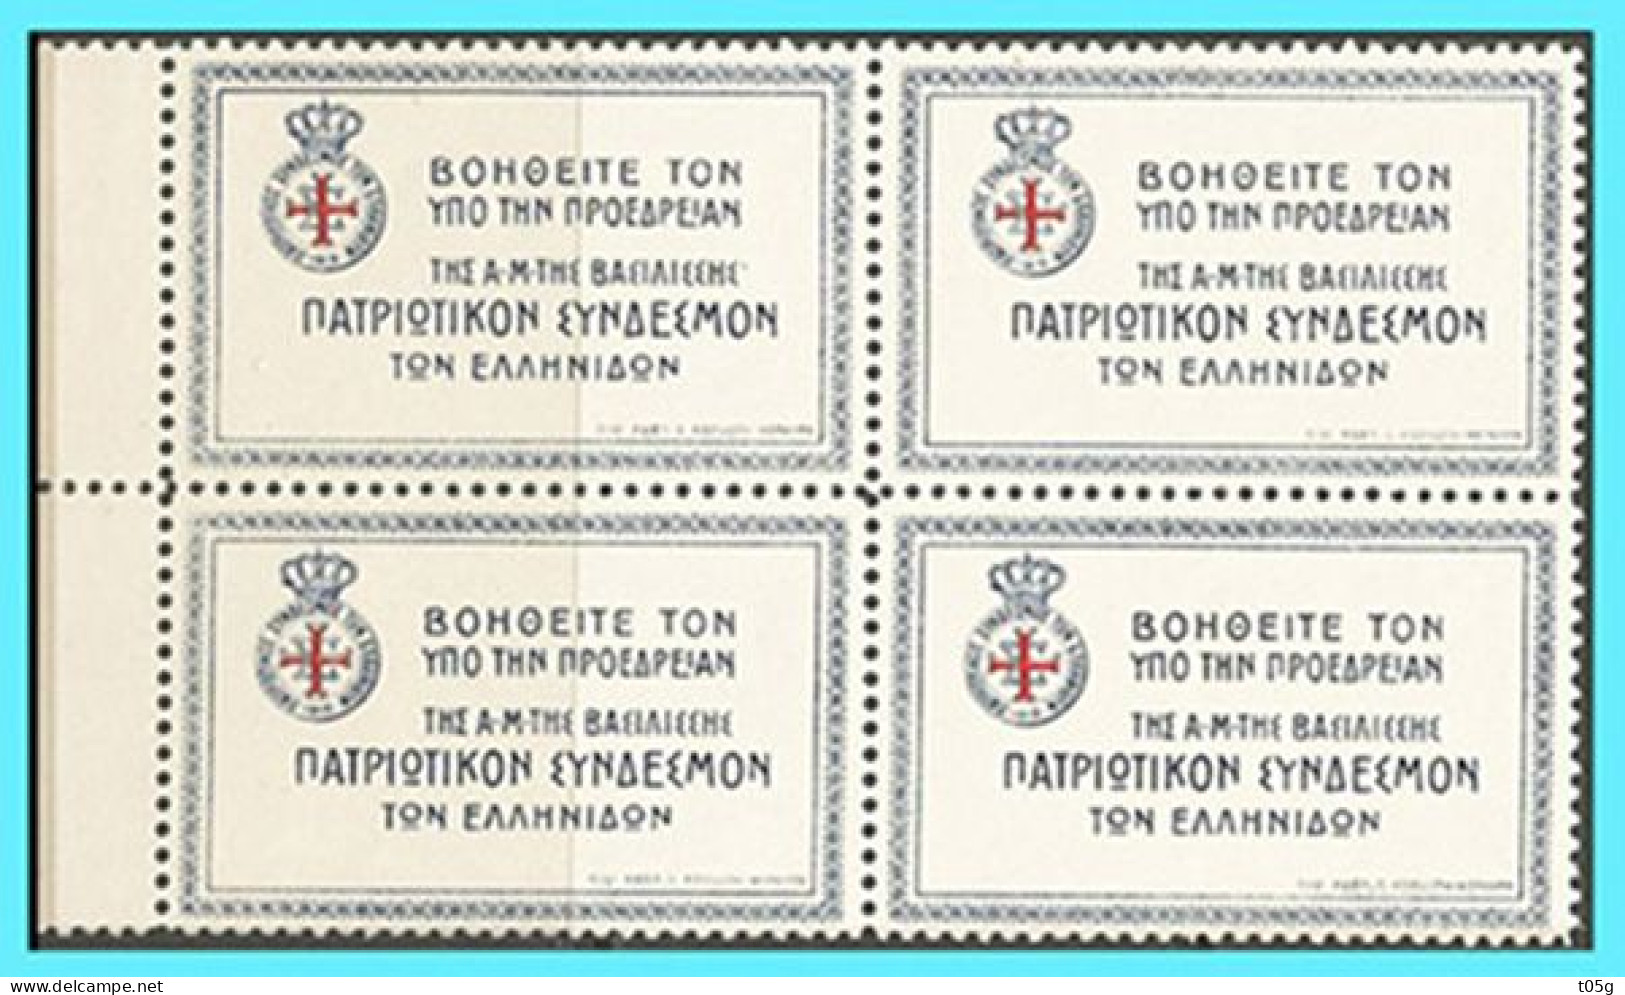 GREECE- GRECE- HELLAS  1915:  " Greek Wommen"s Patriotic League" Charity Stamps Block/4 -  Without Value- Set MNH** - Bienfaisance